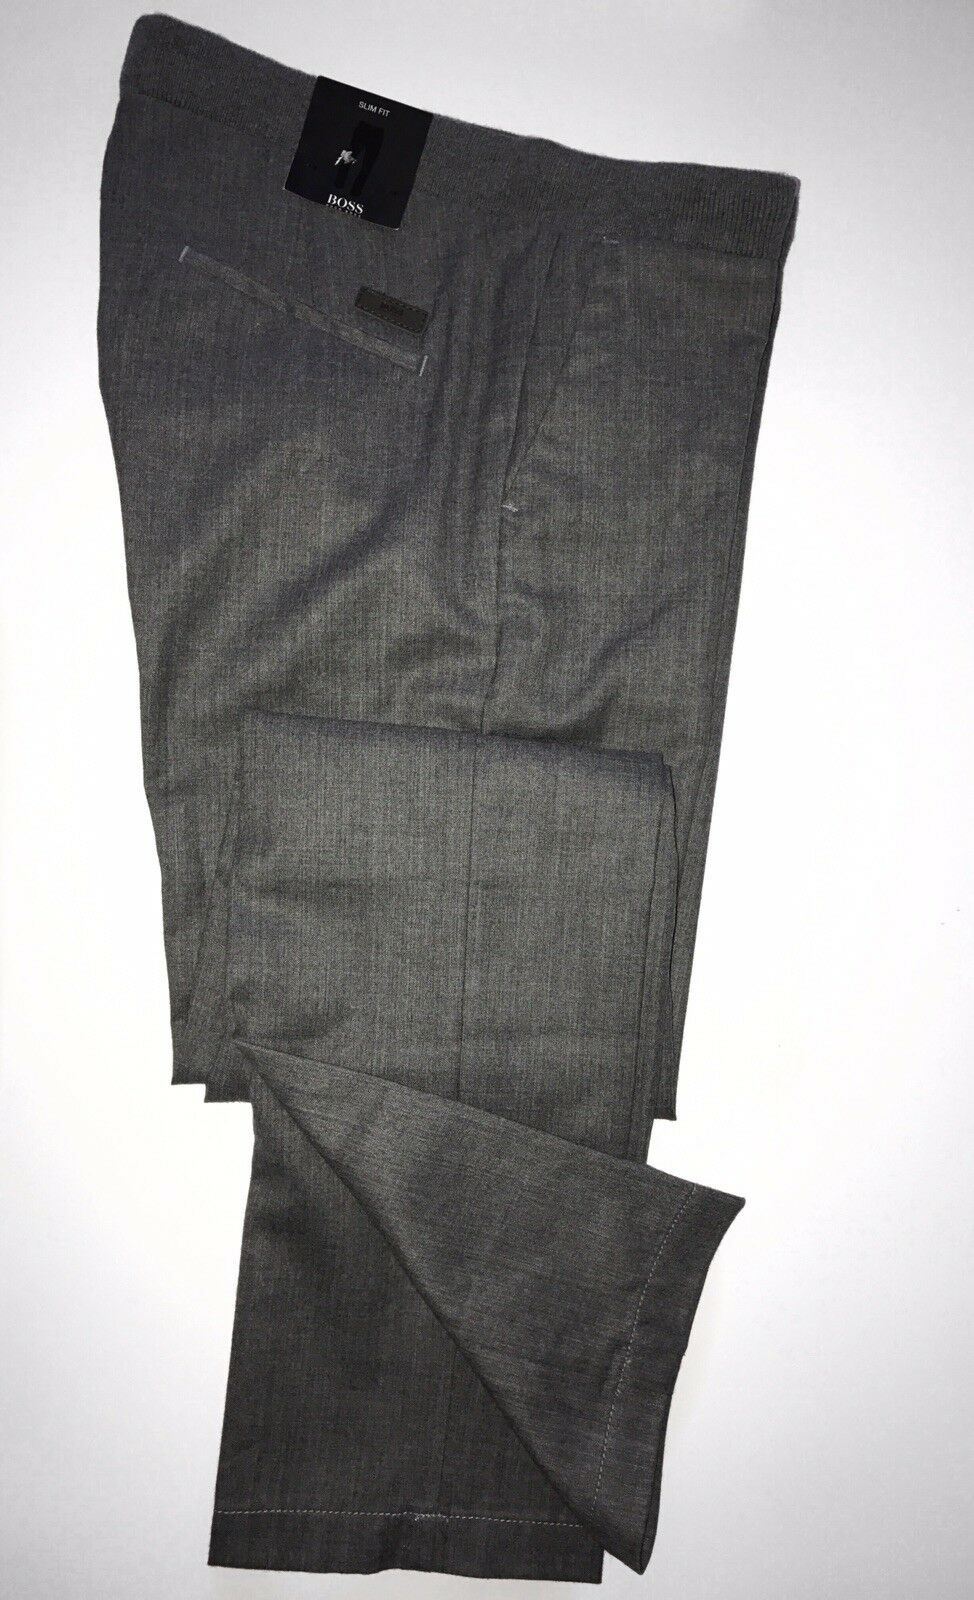 NWT $175 Boss Hugo Boss Rice2 Mens Wool Dark Gray Dress Pants Size 32R US